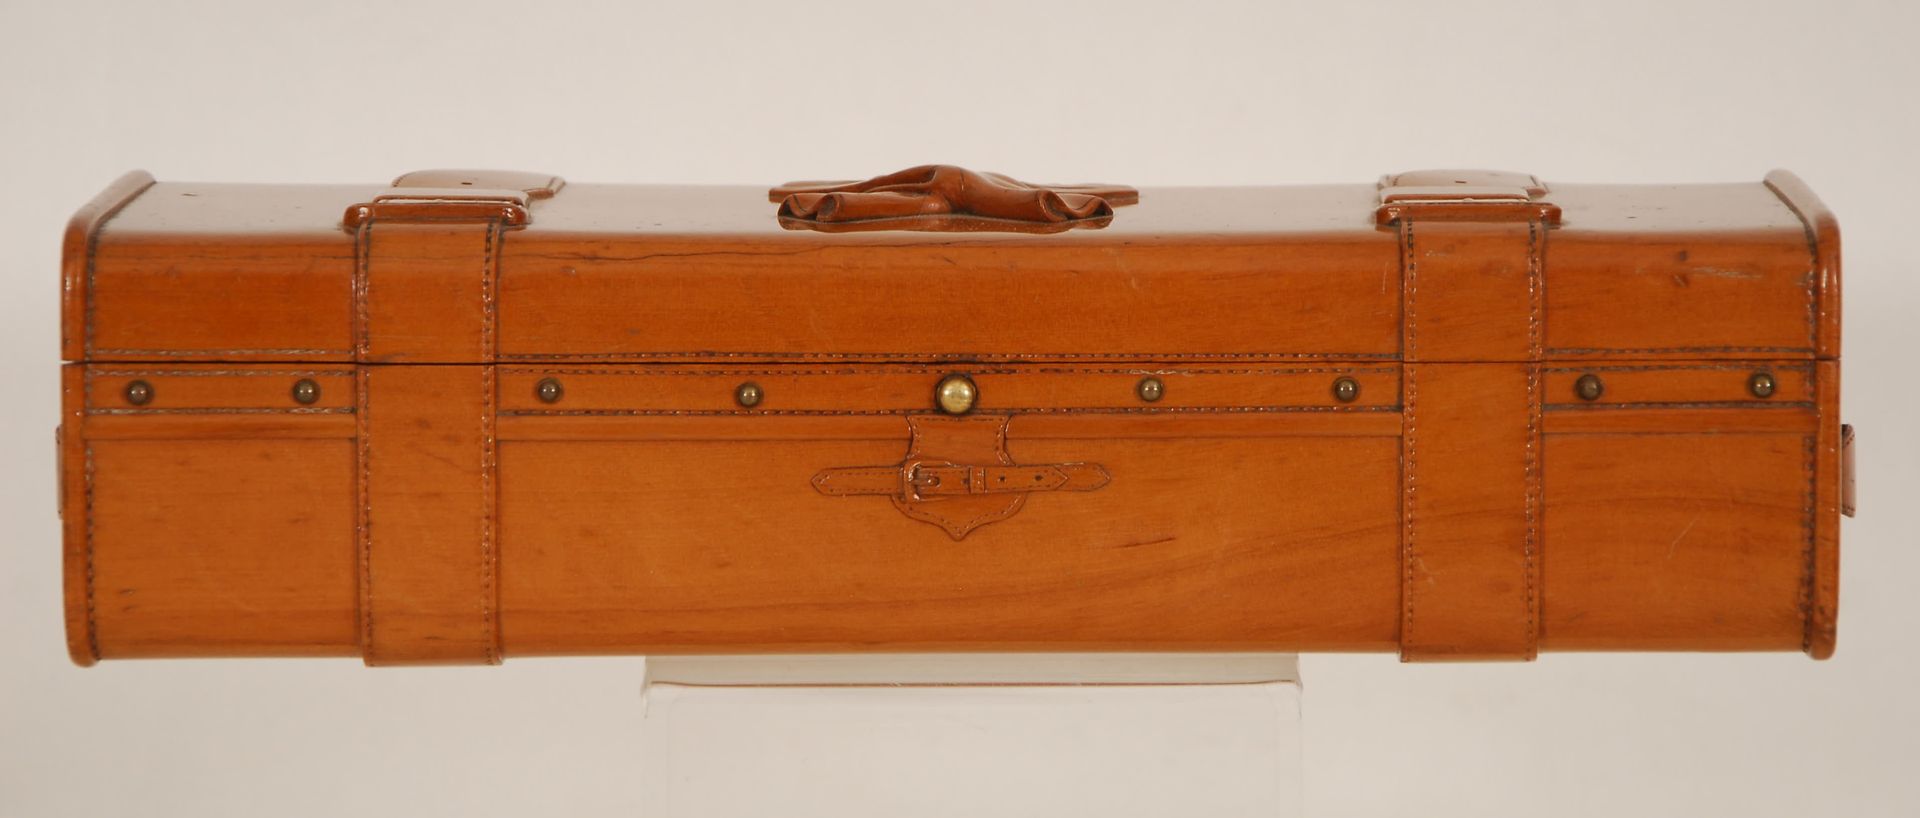 Null Guantera
En forma de baúl de viaje.

Madera tallada.
8 x 29 x 10,5 cm.